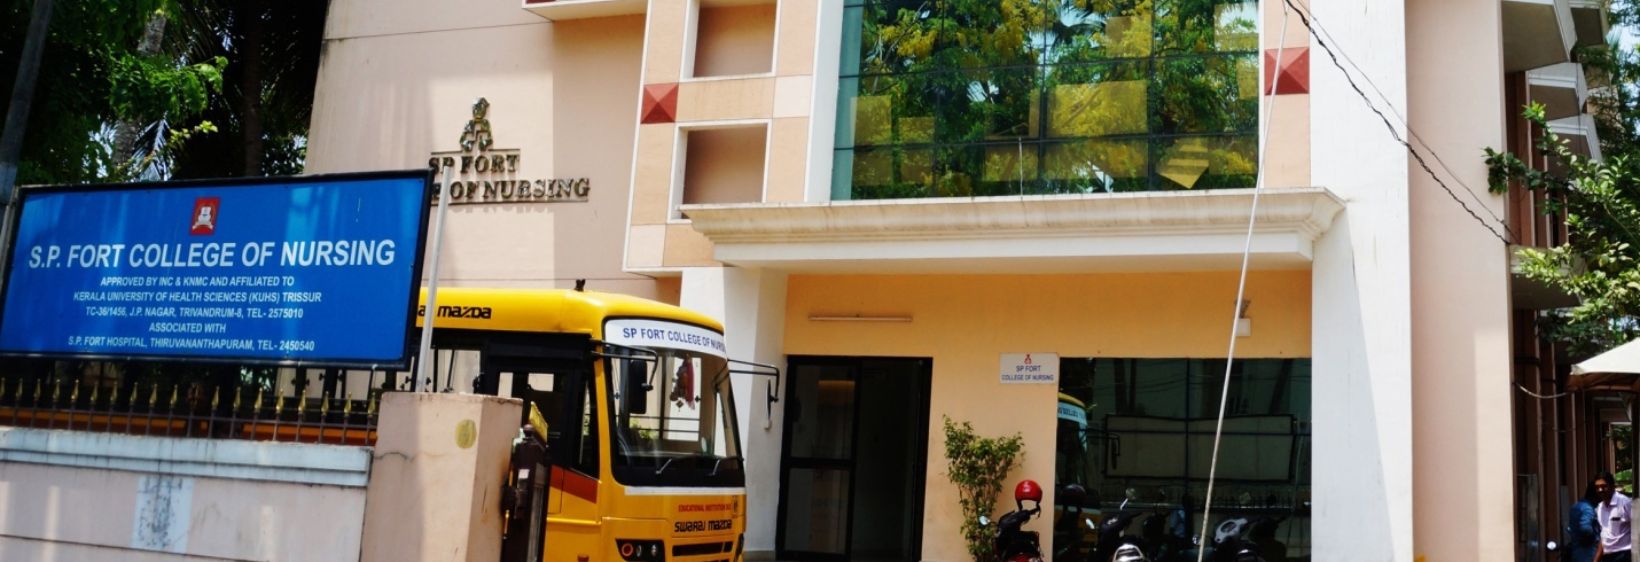 S P Fort College of Nursing - Thiruvananthapuram